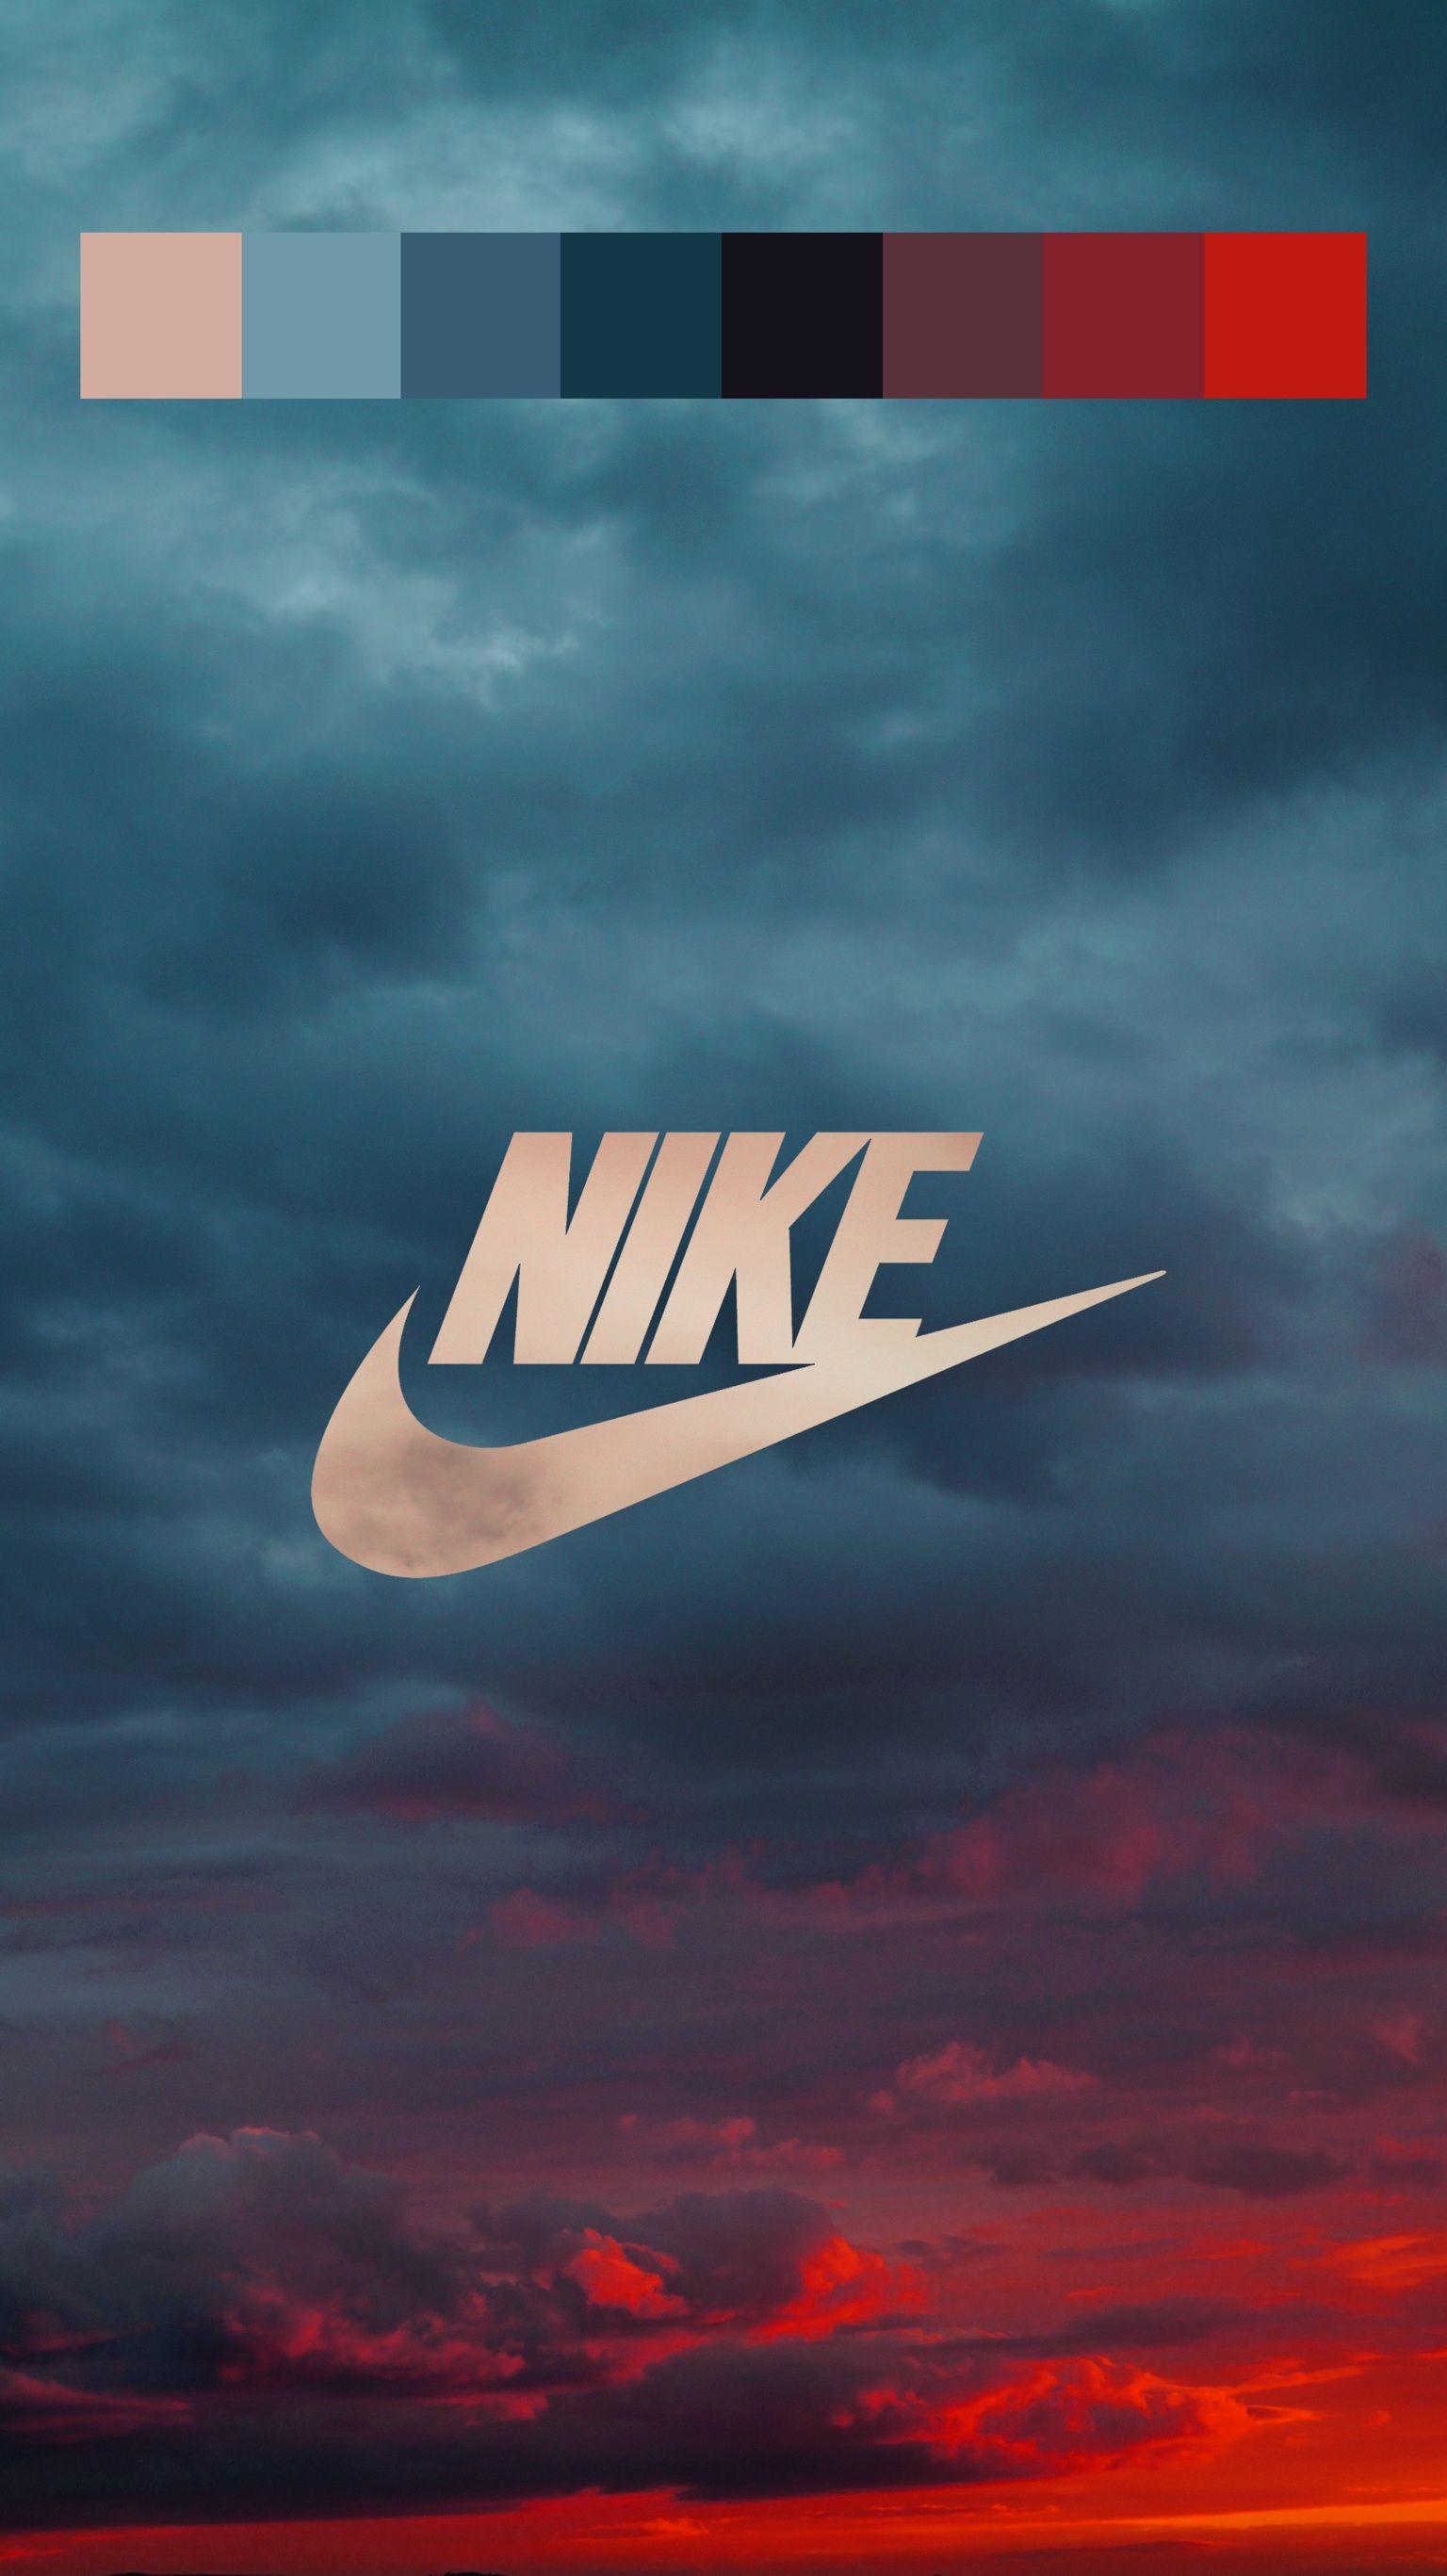 Dope Galaxy Jordan Logo - Nike3colorful9 | wallpapers in 2019 | Pinterest | Nike wallpaper ...